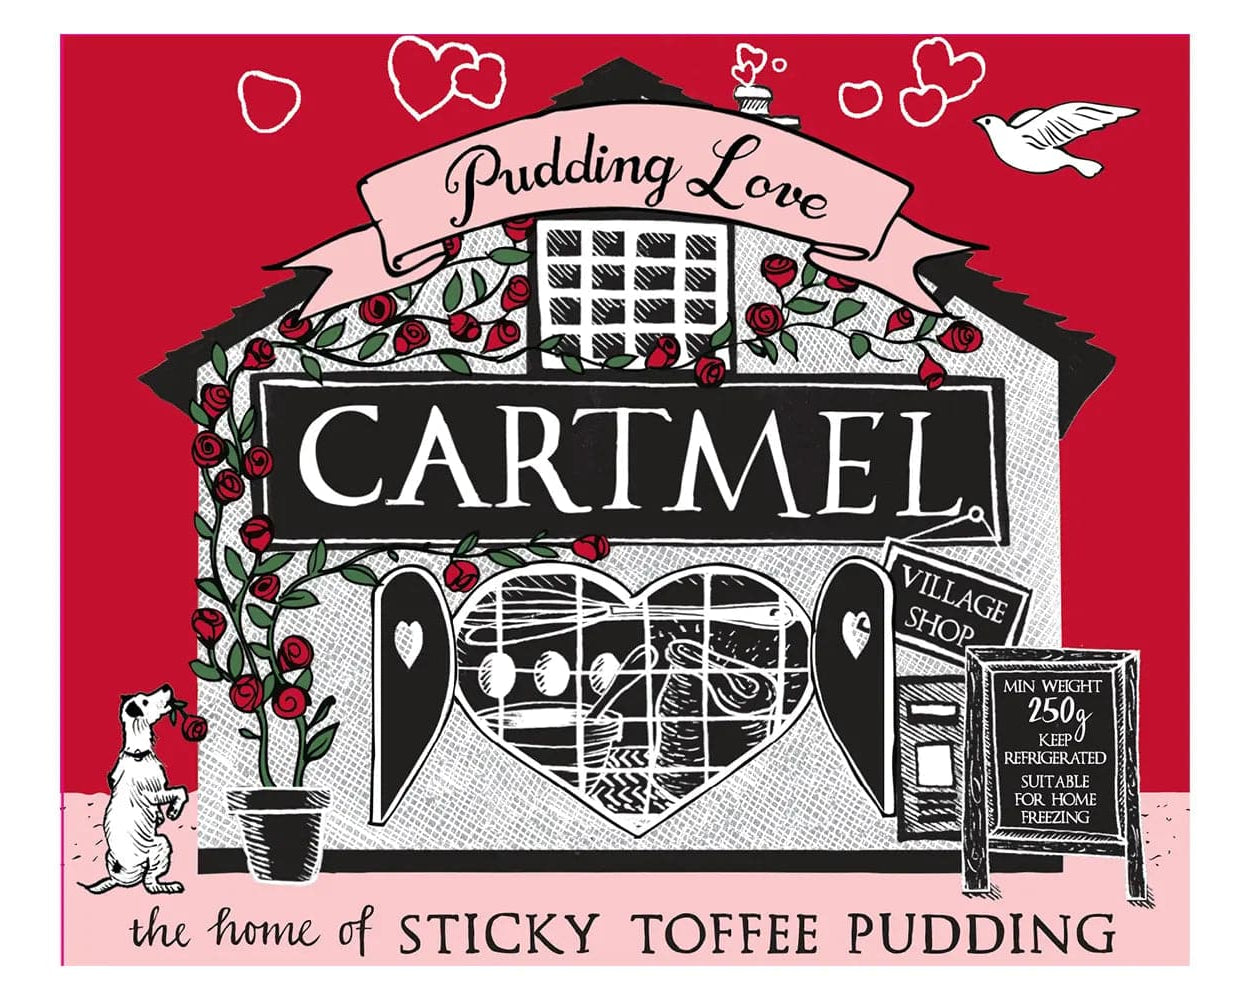 Cartmel Pudding Love 250g - IMP & MAKER